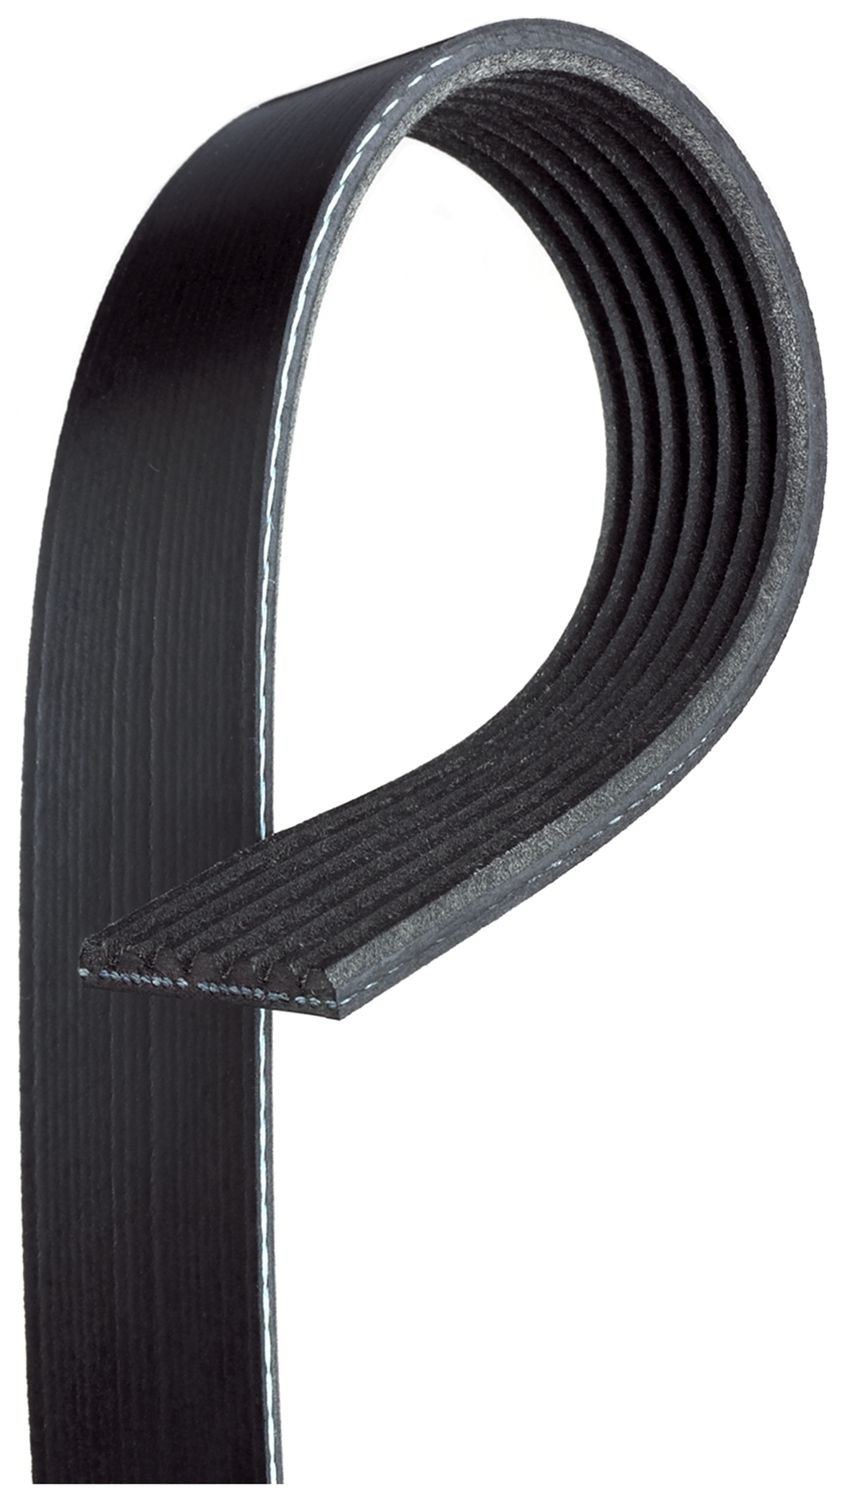 GATES 7PK1800 Serpentine belt 1800mm, 7, G-Force™ C12™ CVT Belt